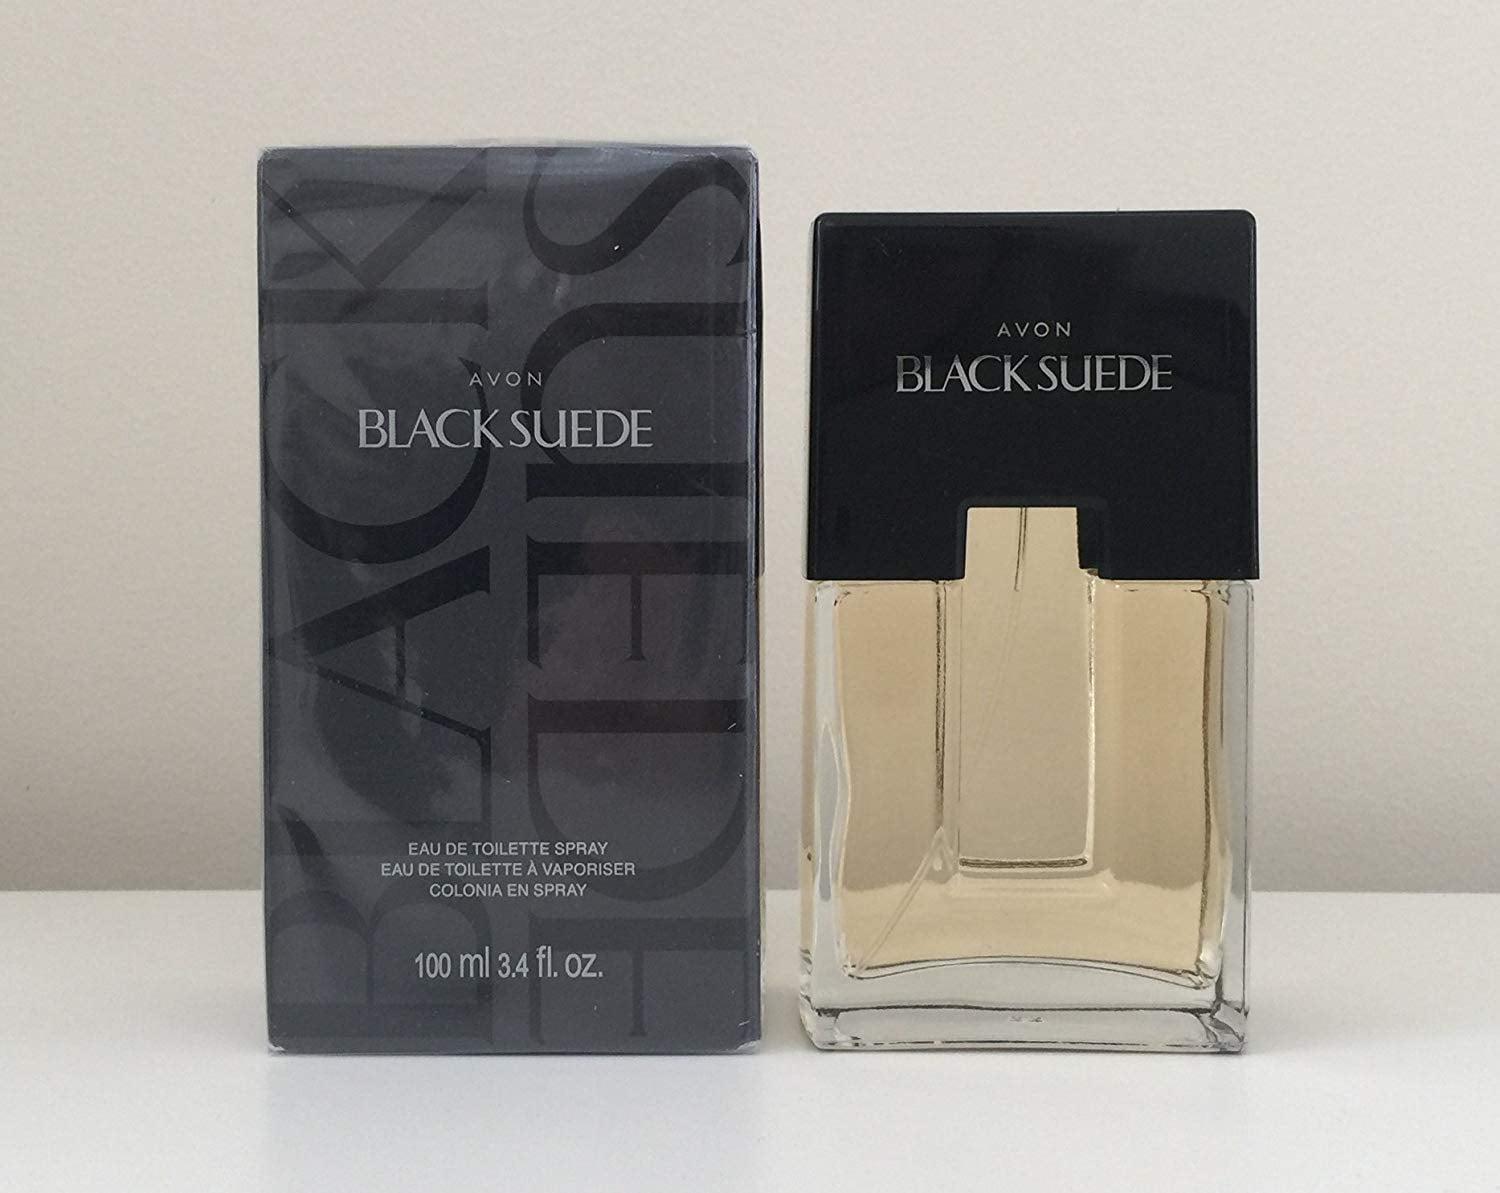 Black Suede Leather Avon cologne - a fragrance for men 2010